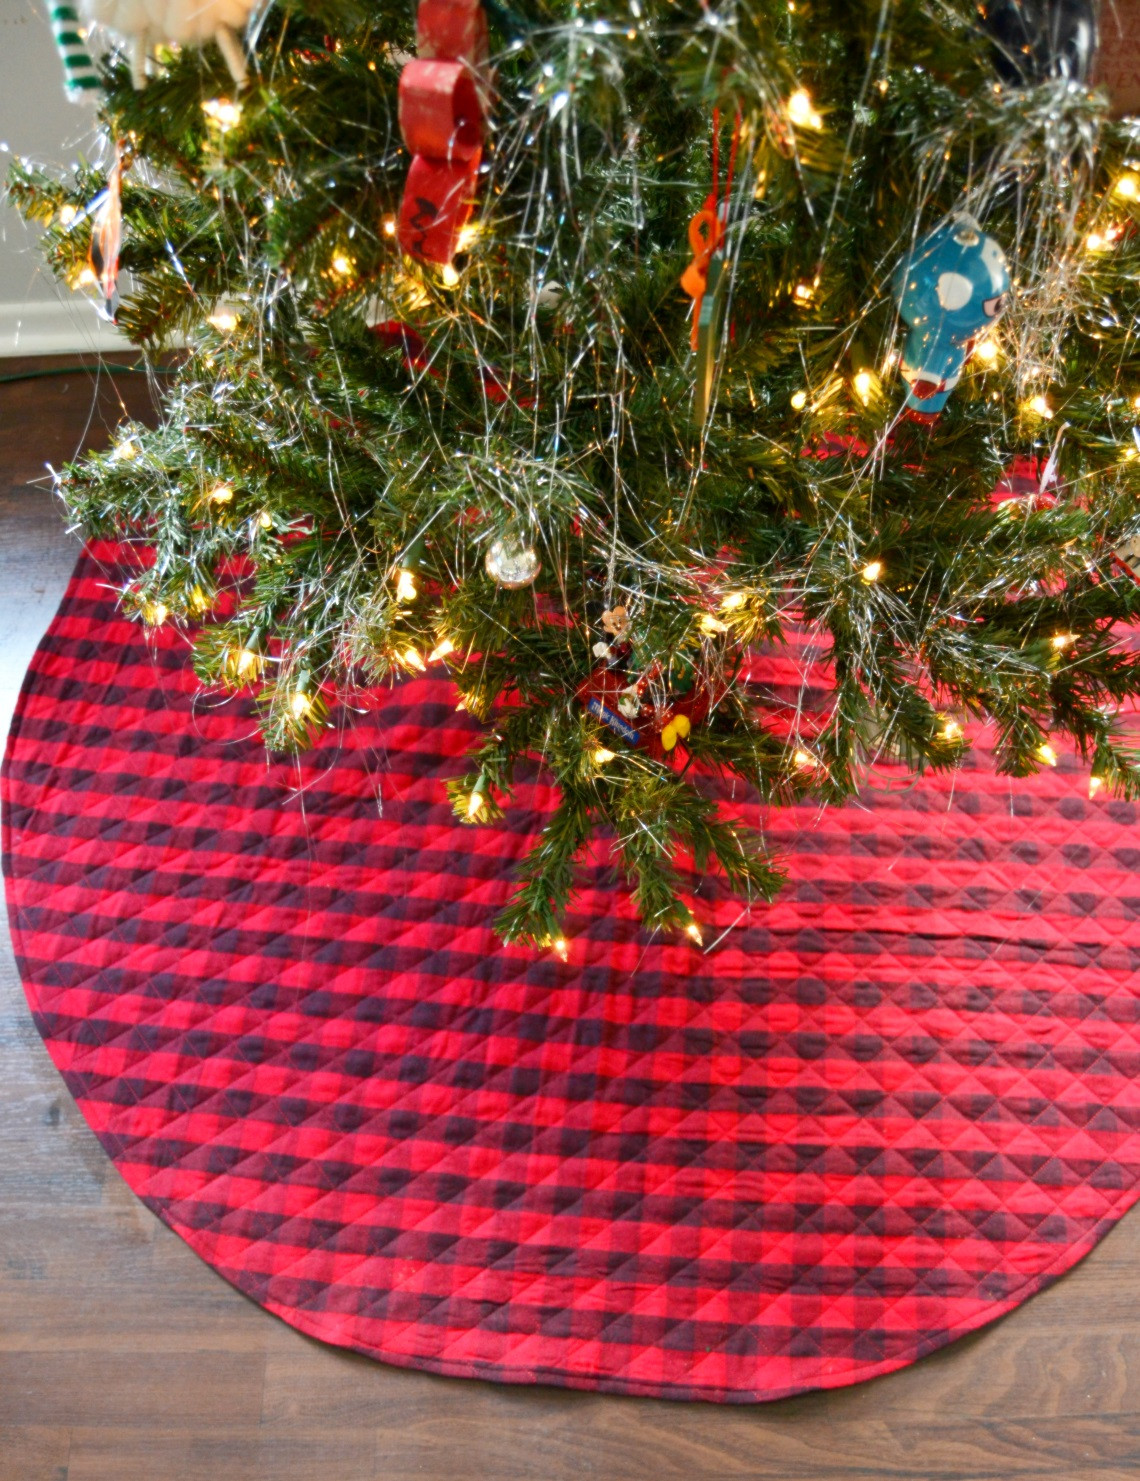 DIY Christmas Tree Skirts
 The DIY Christmas Tree Skirt that s Super Easy – Mary